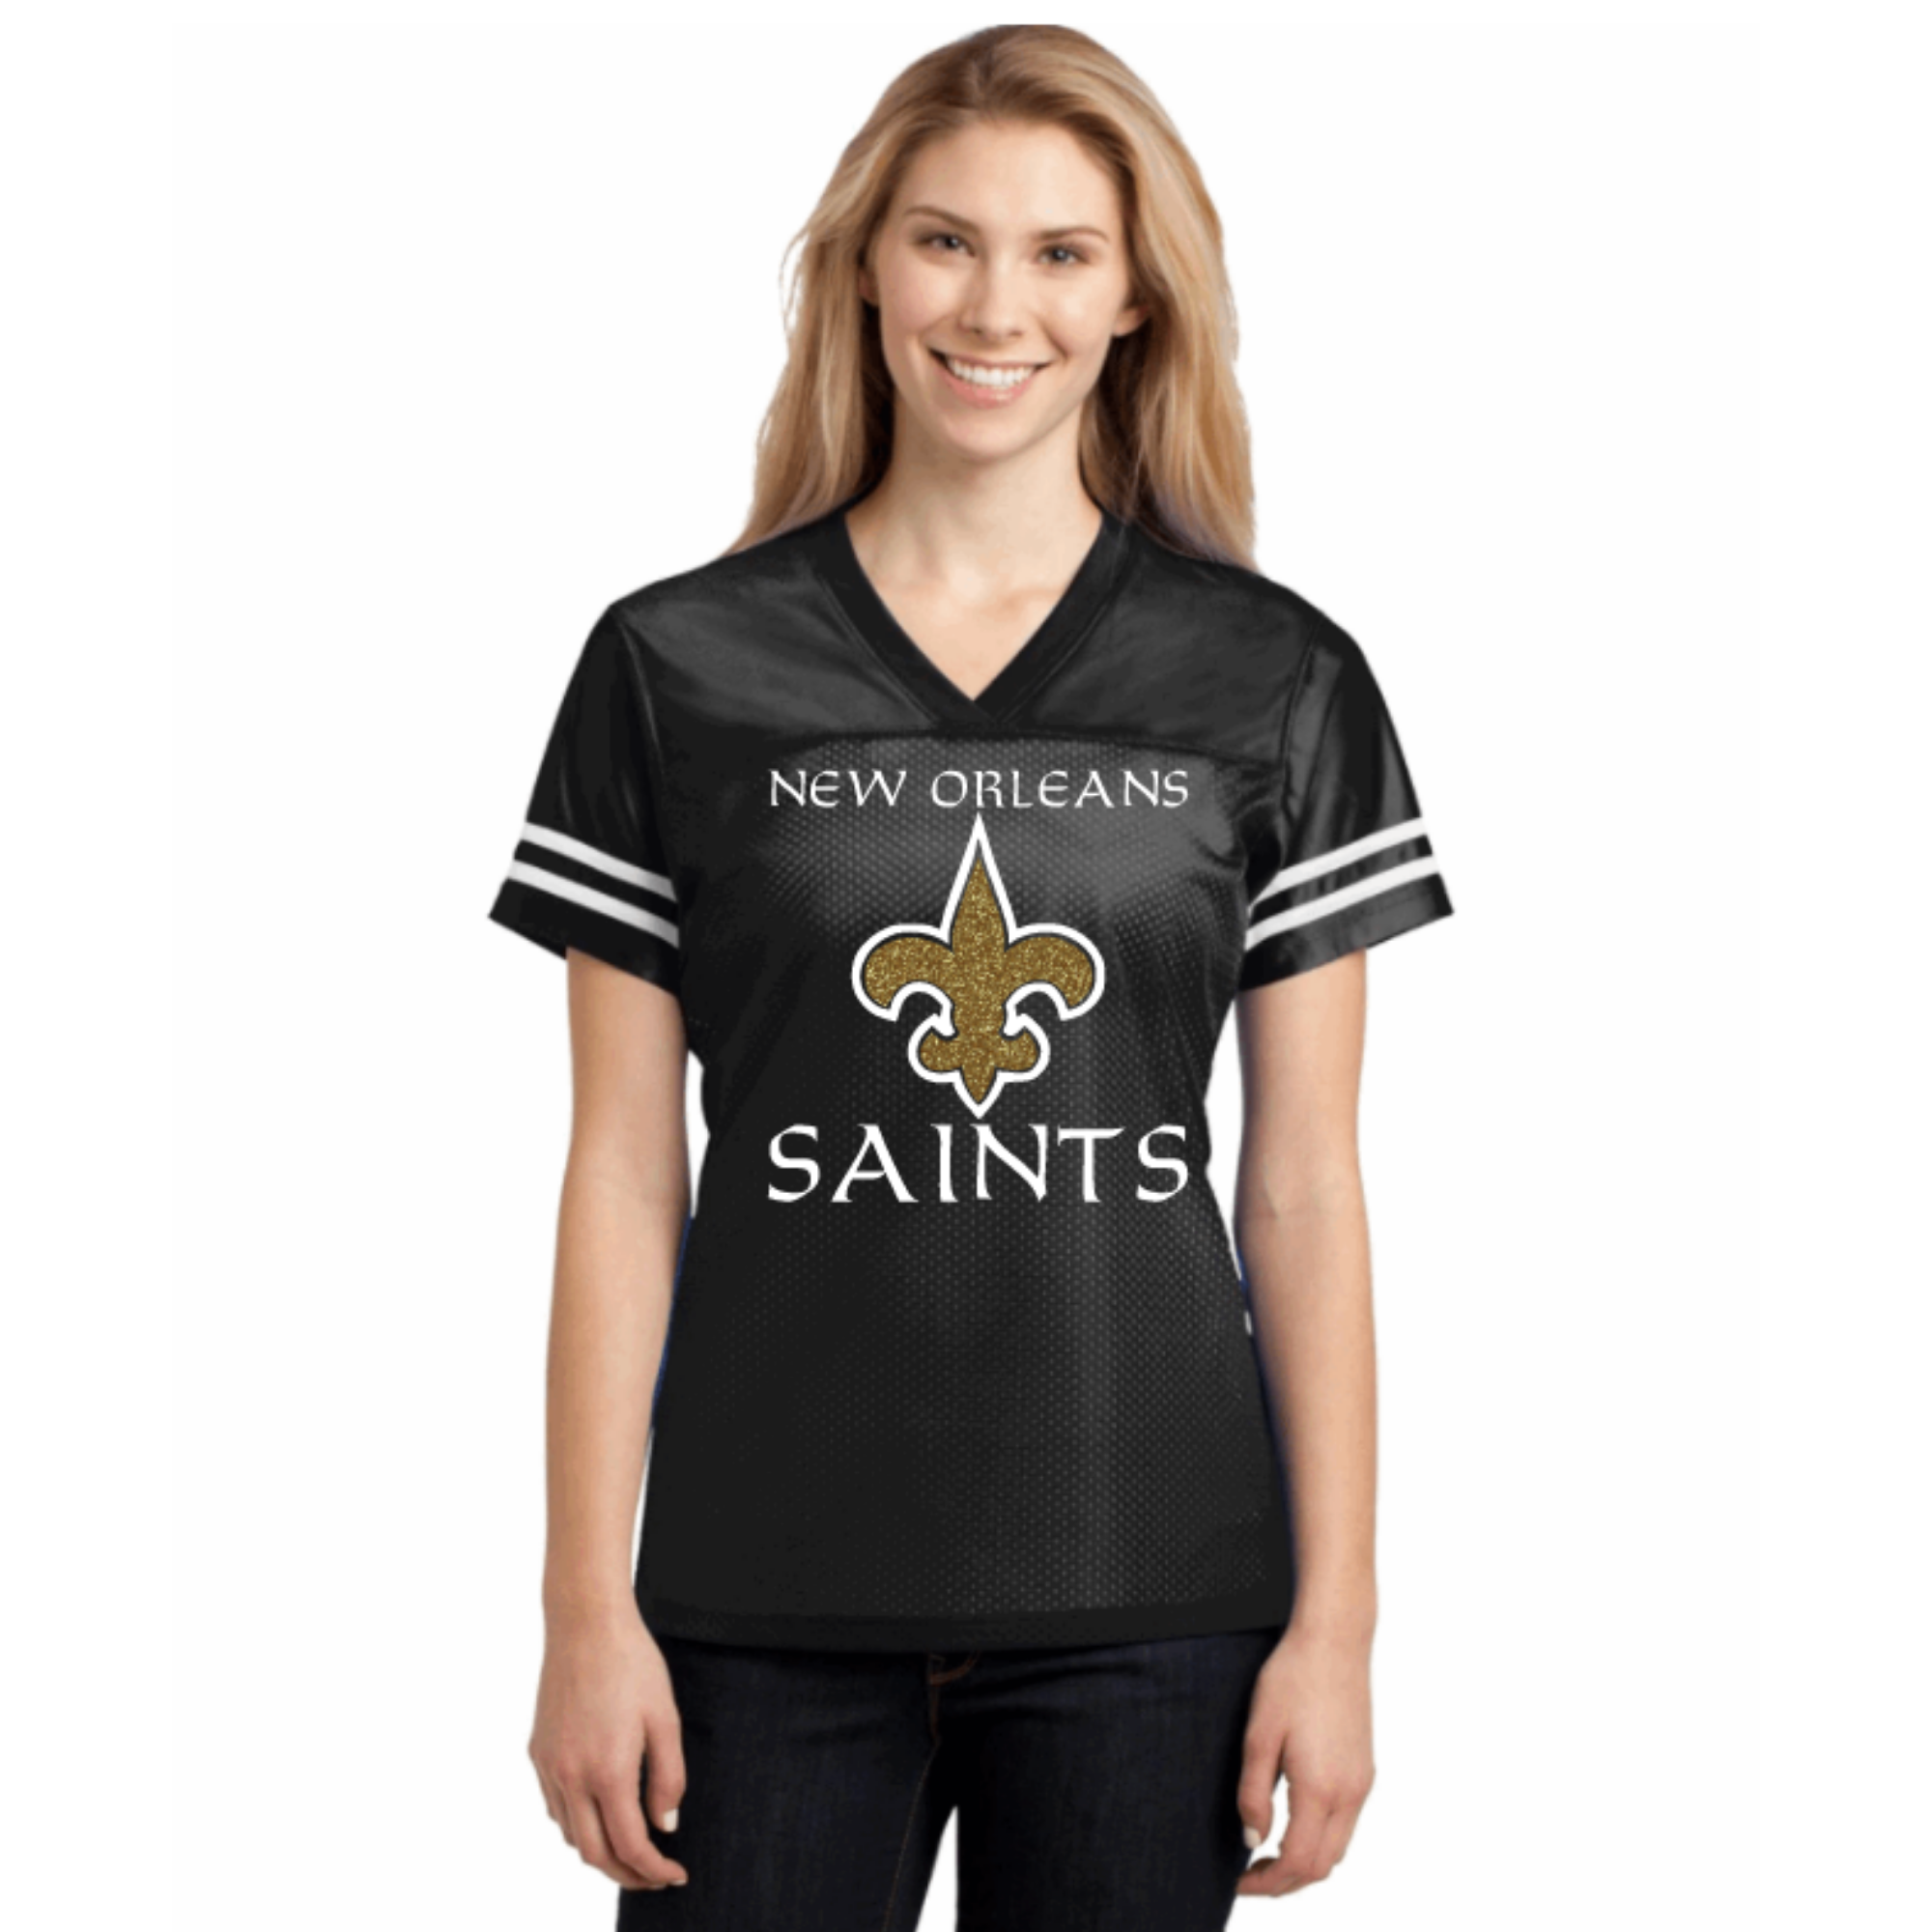 New Orleans Saints Inspired Glitter Top